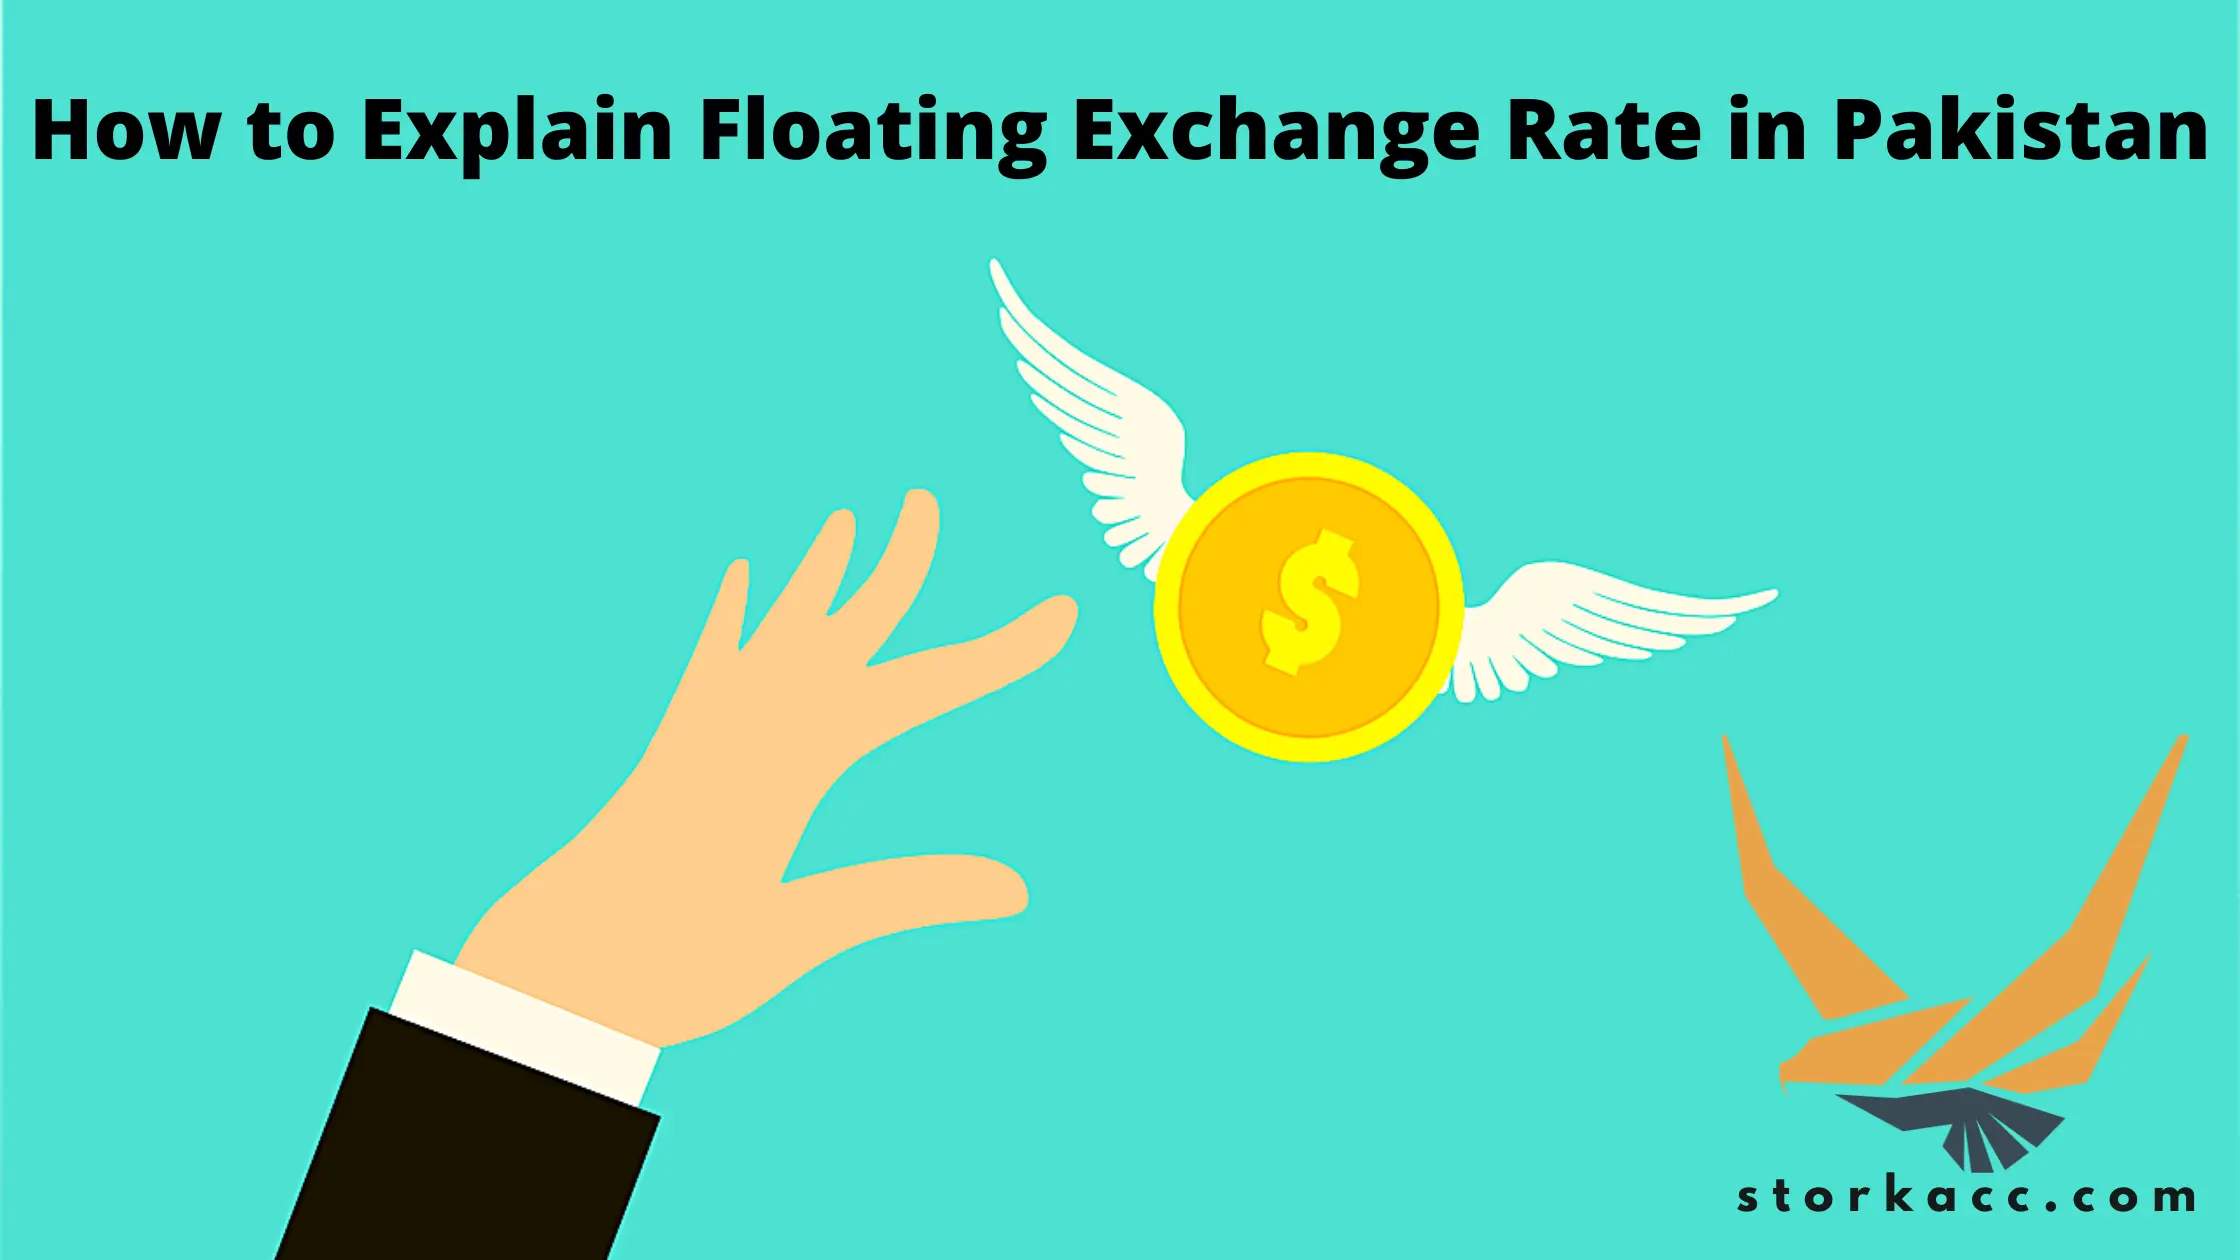 Dollar flying away to explain floating exchange rate